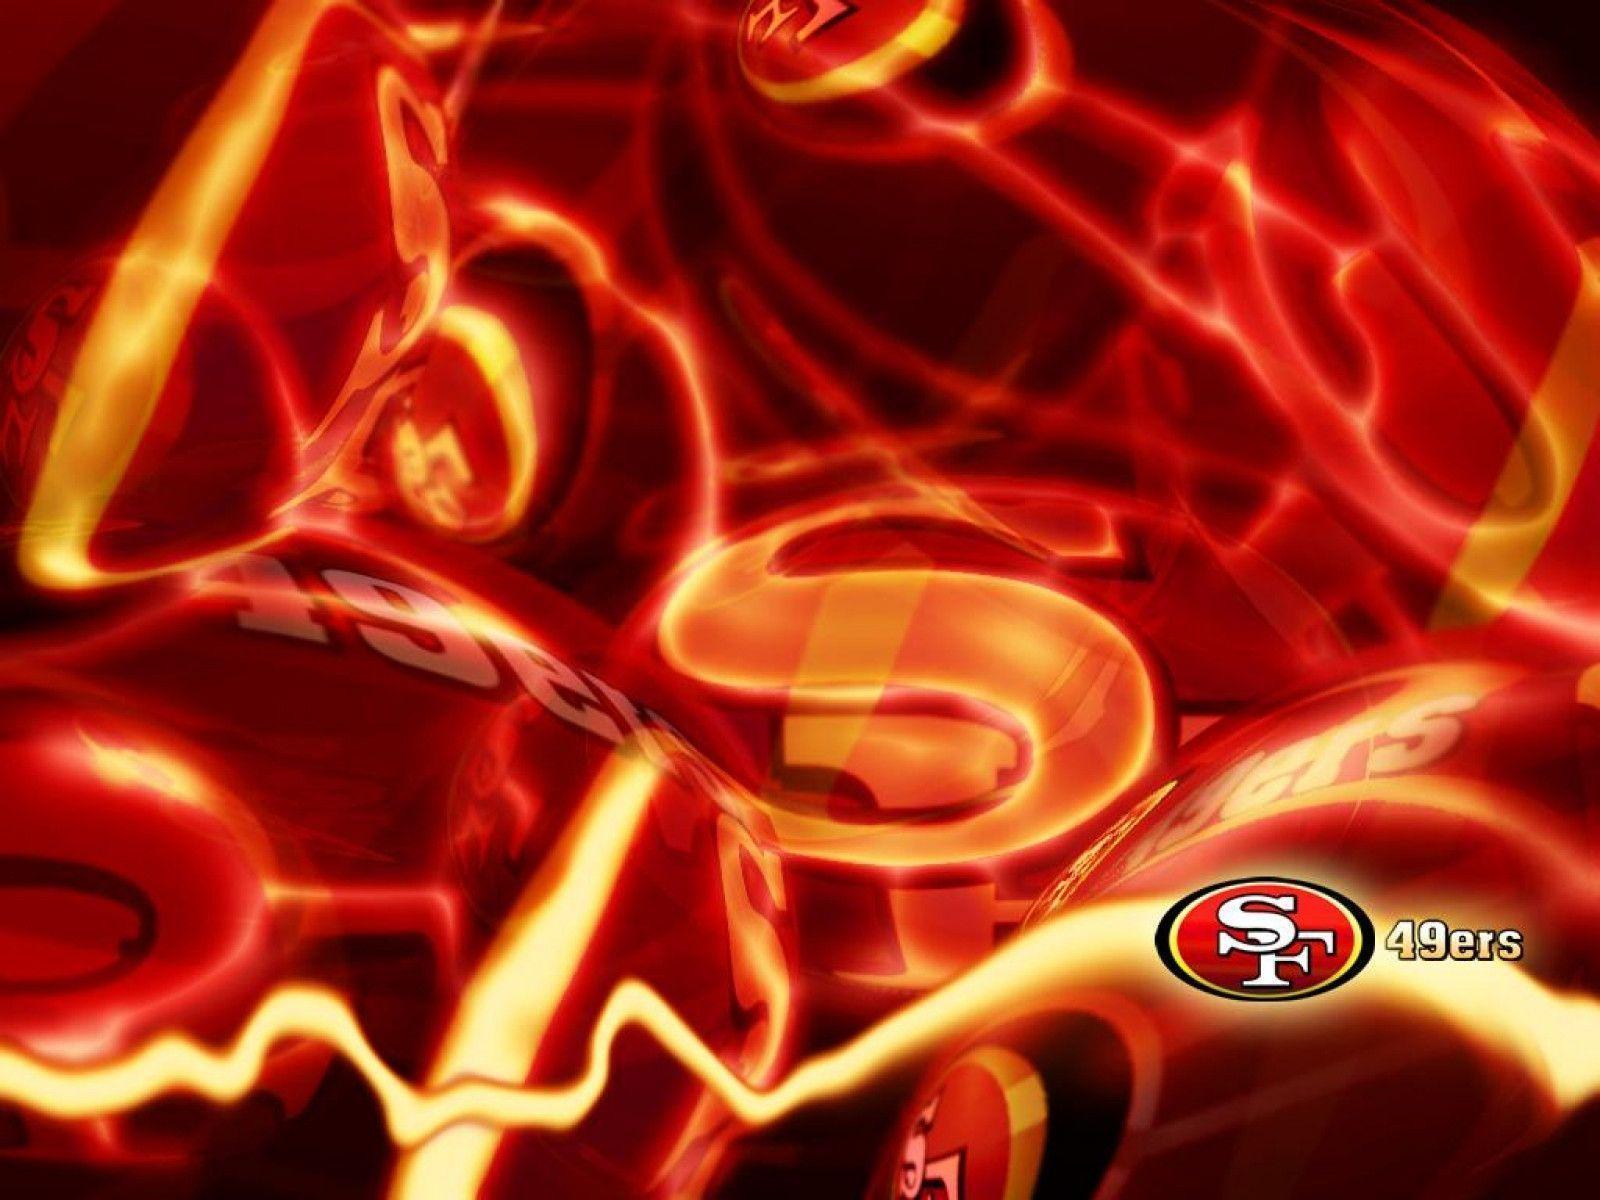 San Francisco 49ers wallpaper. San Francisco 49ers background